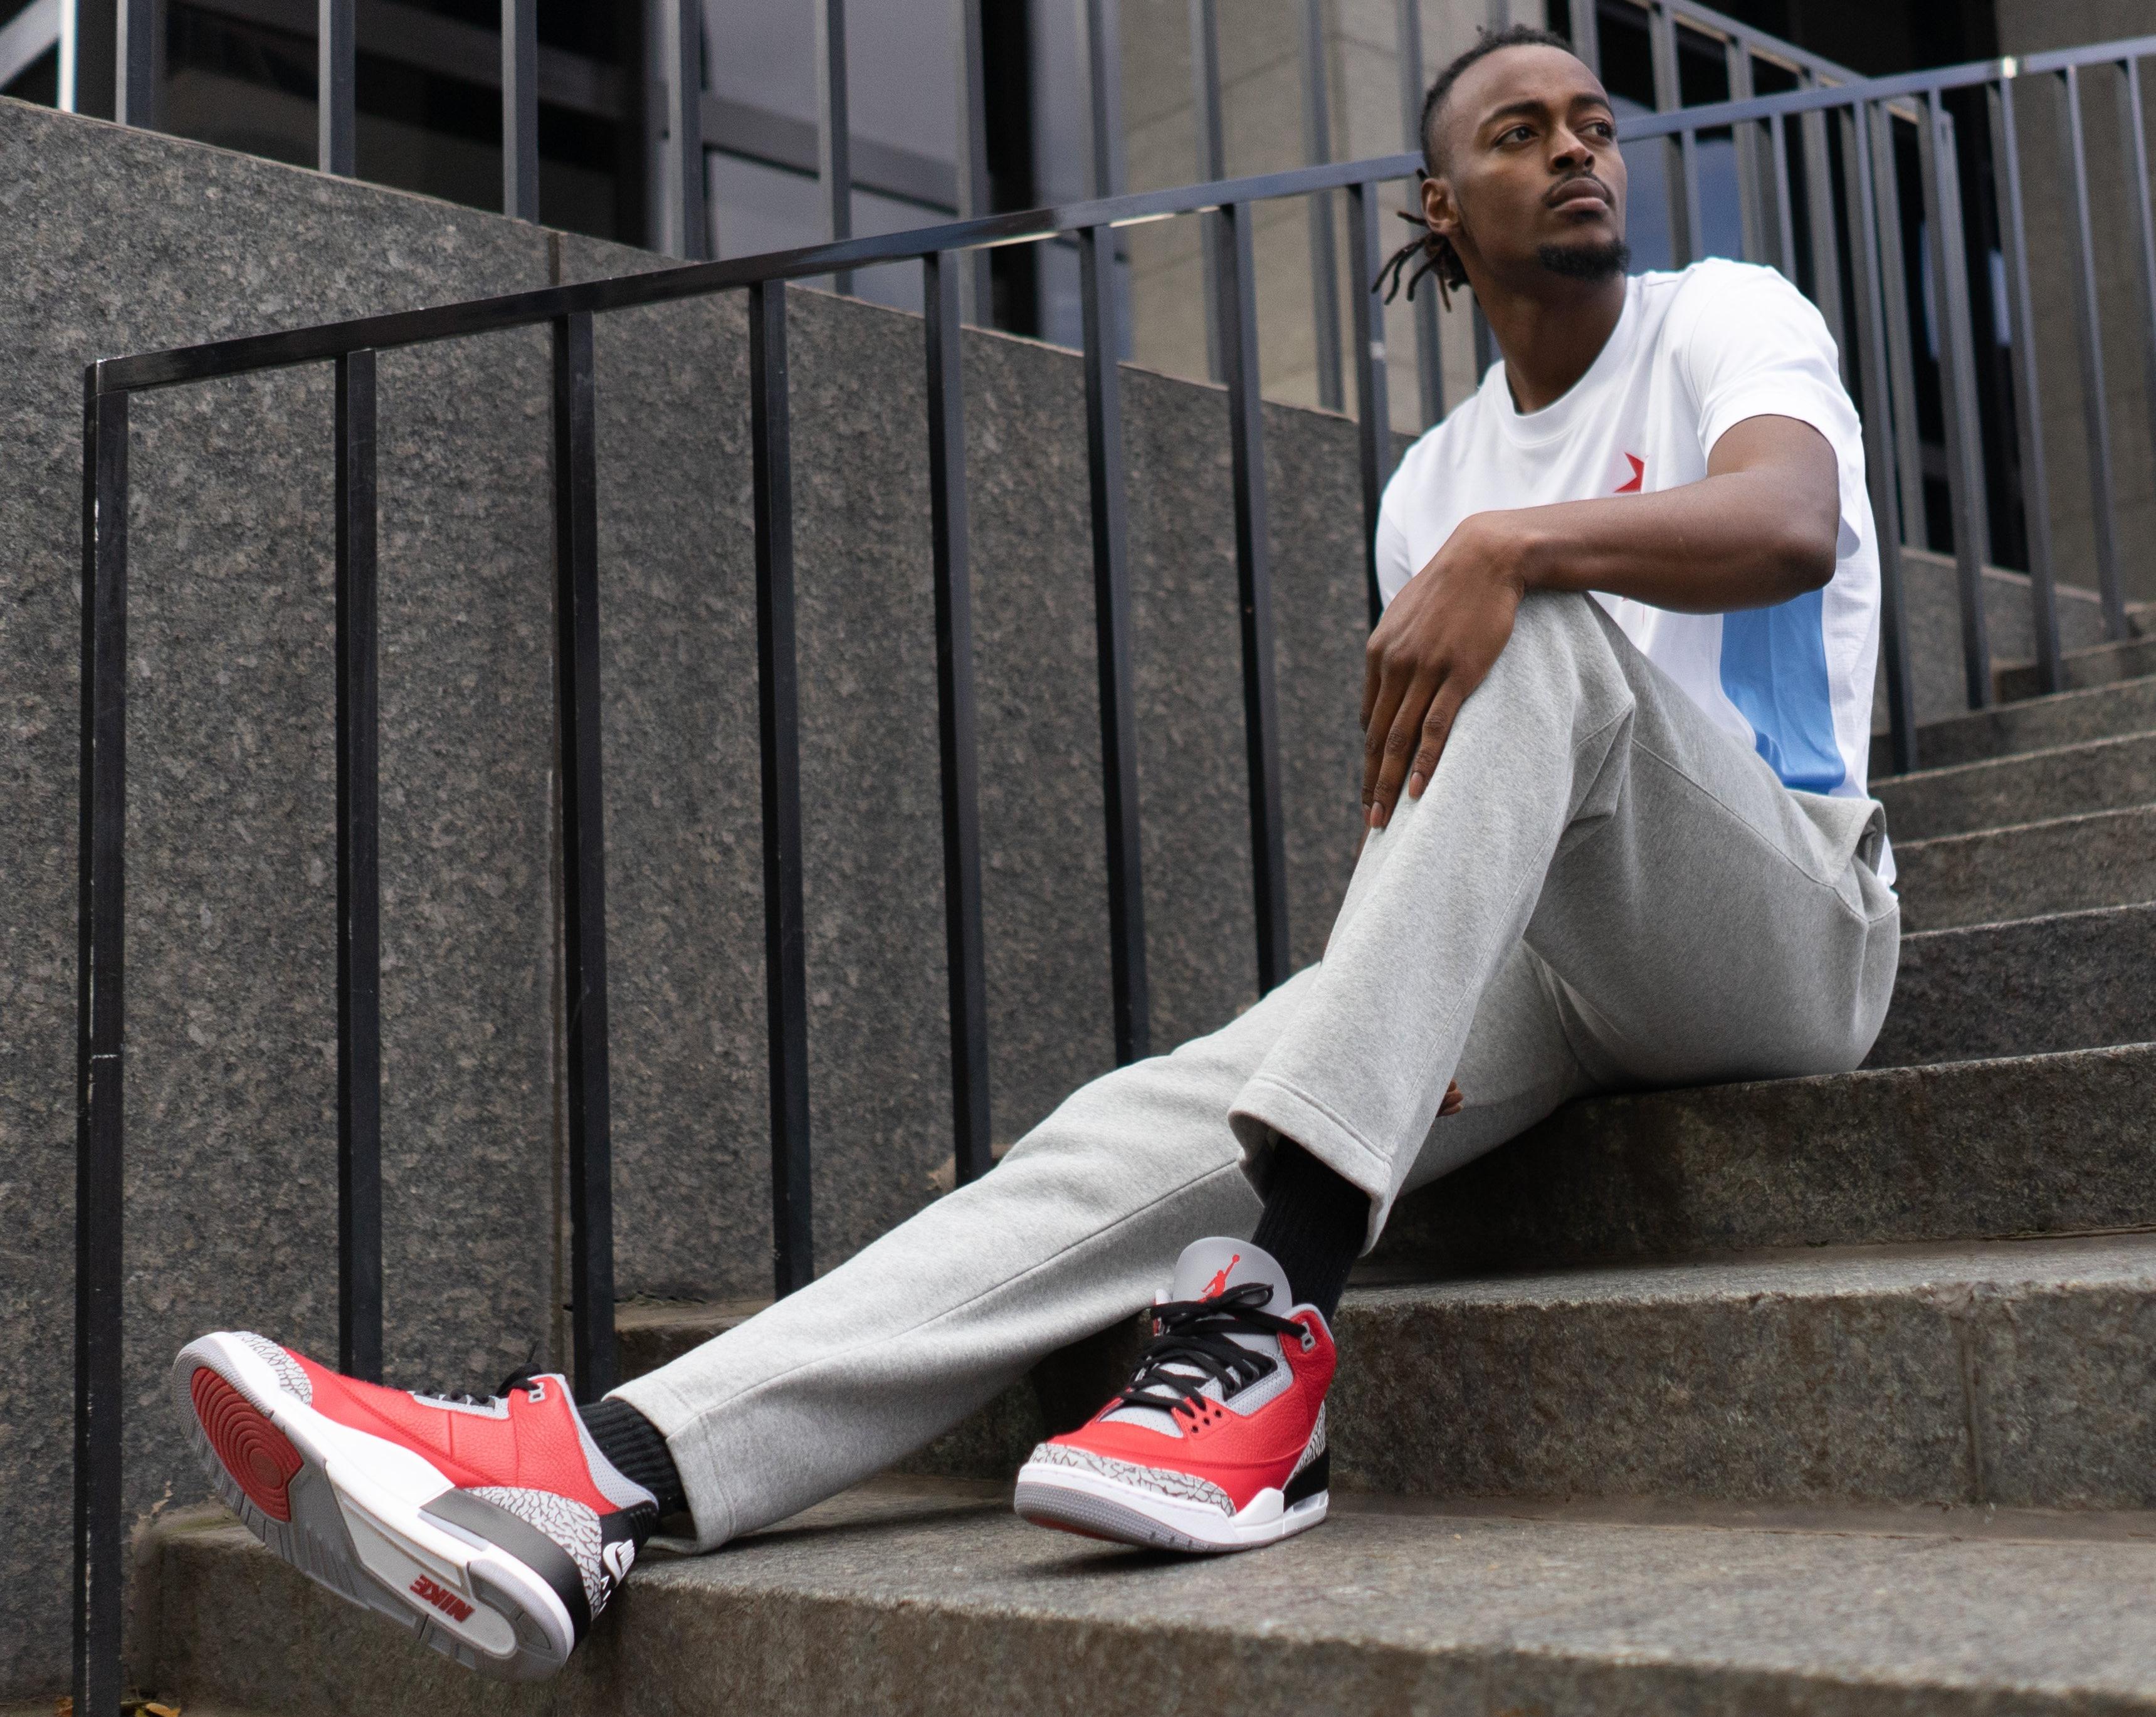 Sneakers Release Air Jordan Retro 3 Unite Fire Red Cement Grey Black Men S And Kids Basketball Shoe